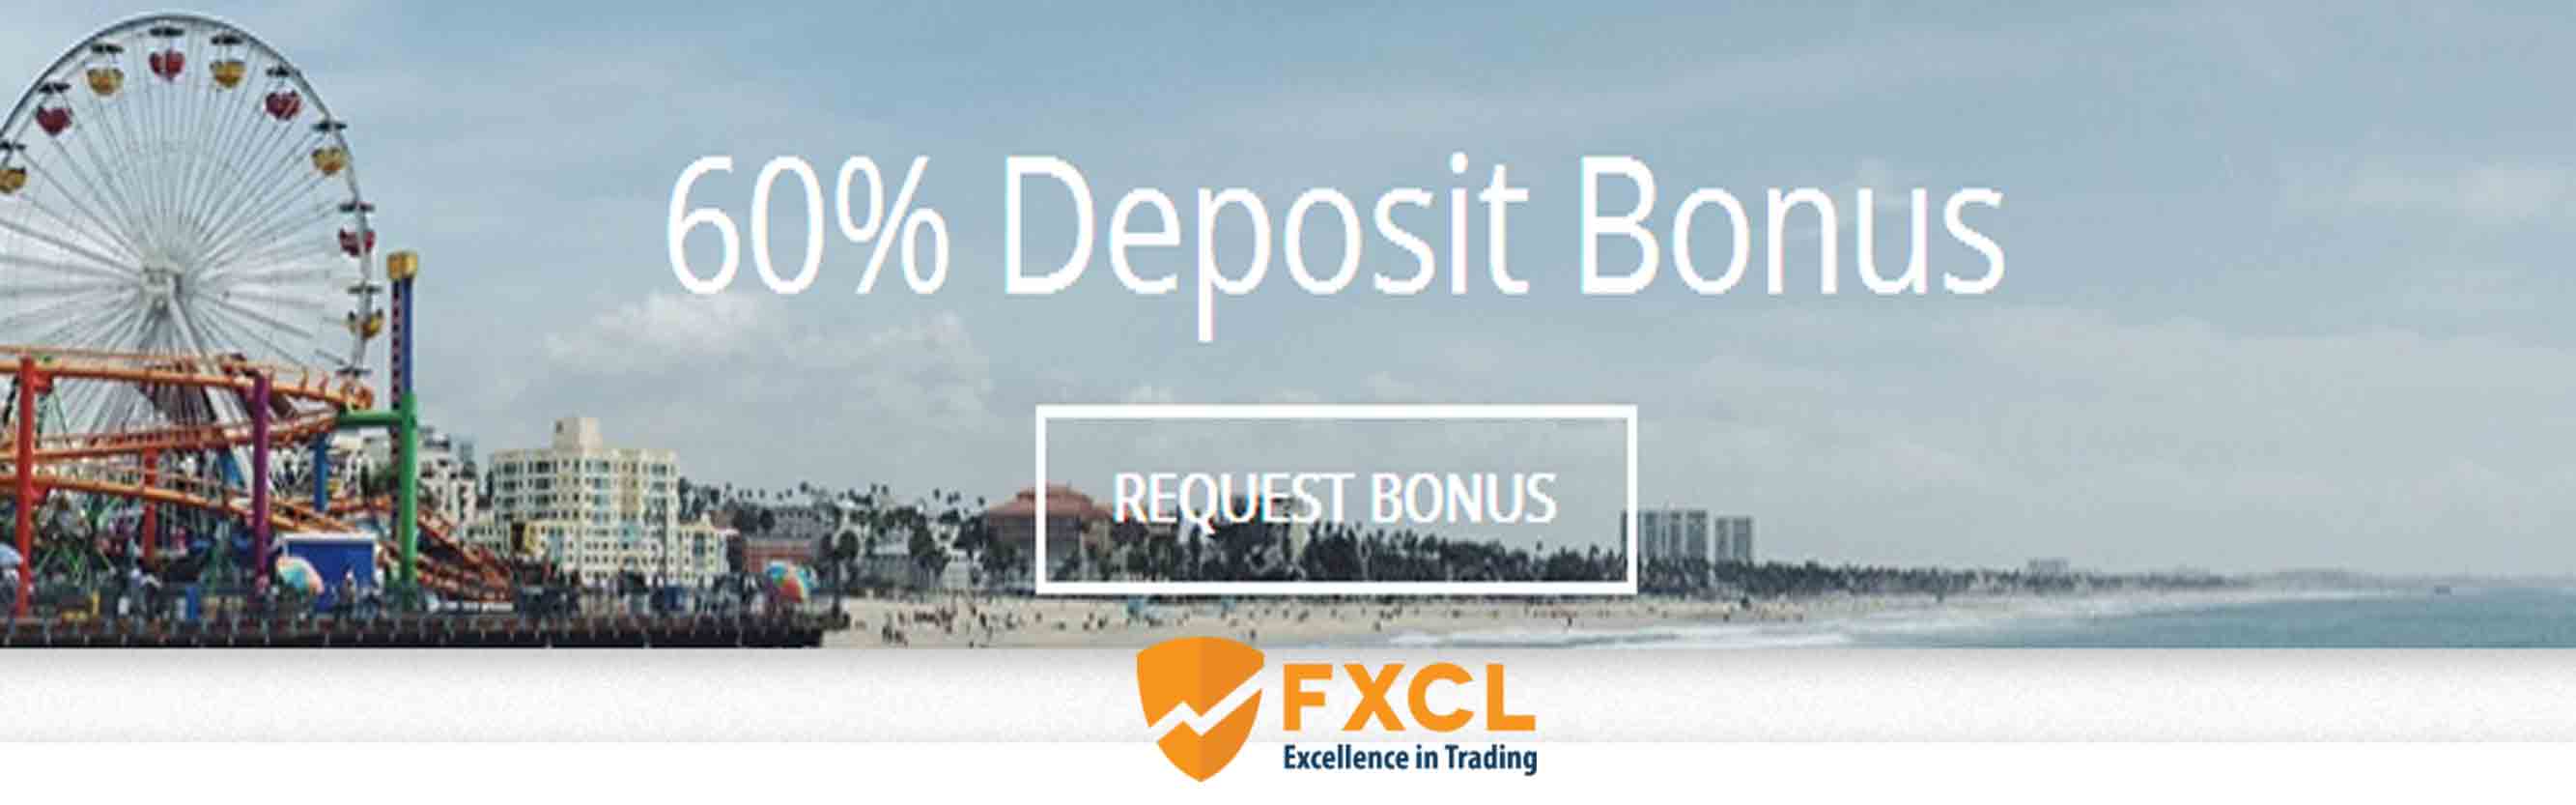 FXCL - 60% Deposit Bonus - iForex Bonus | Forex No Deposit ...